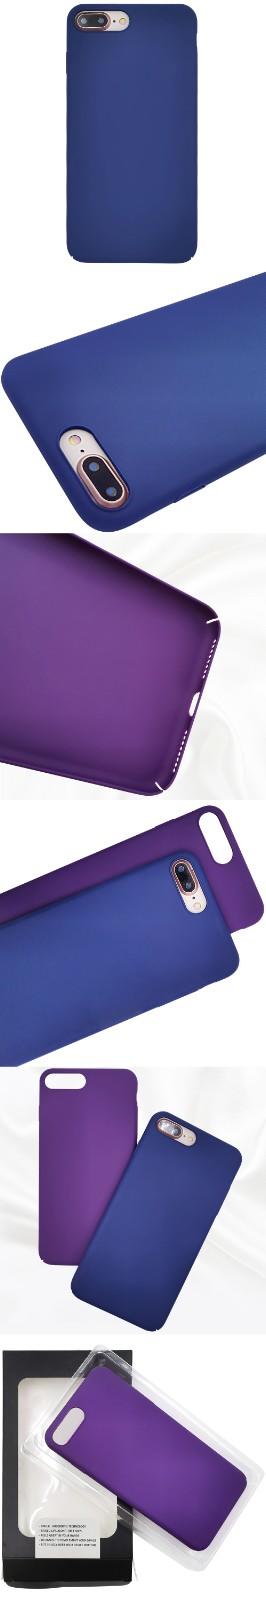 semitransparent iphone case companies series for shop